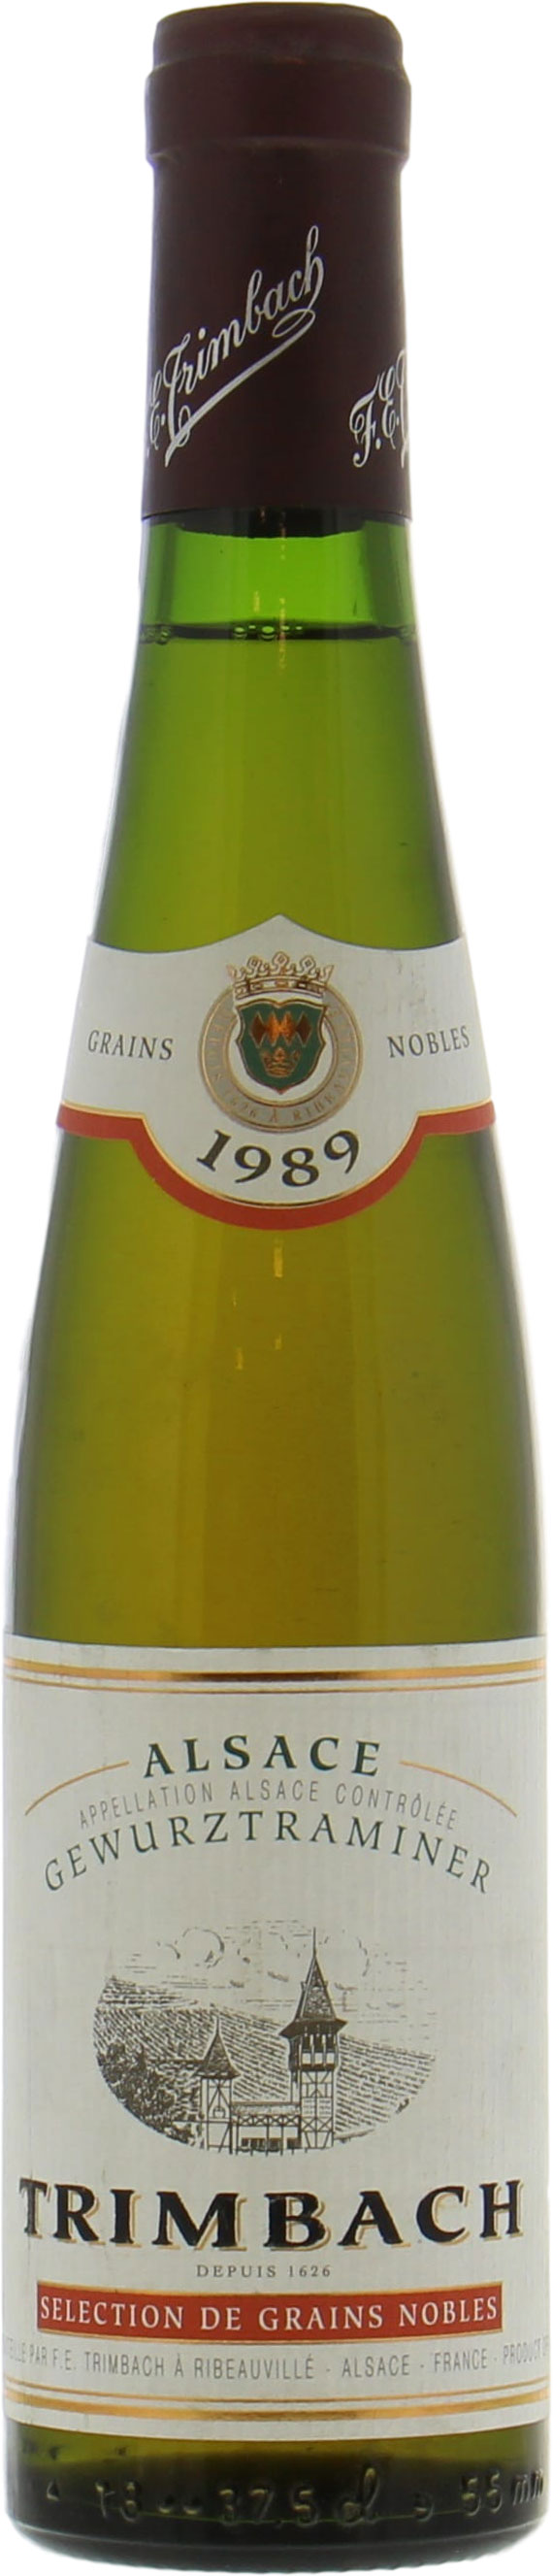 Trimbach - Gewurztraminer Grains Nobles 1989 Perfect